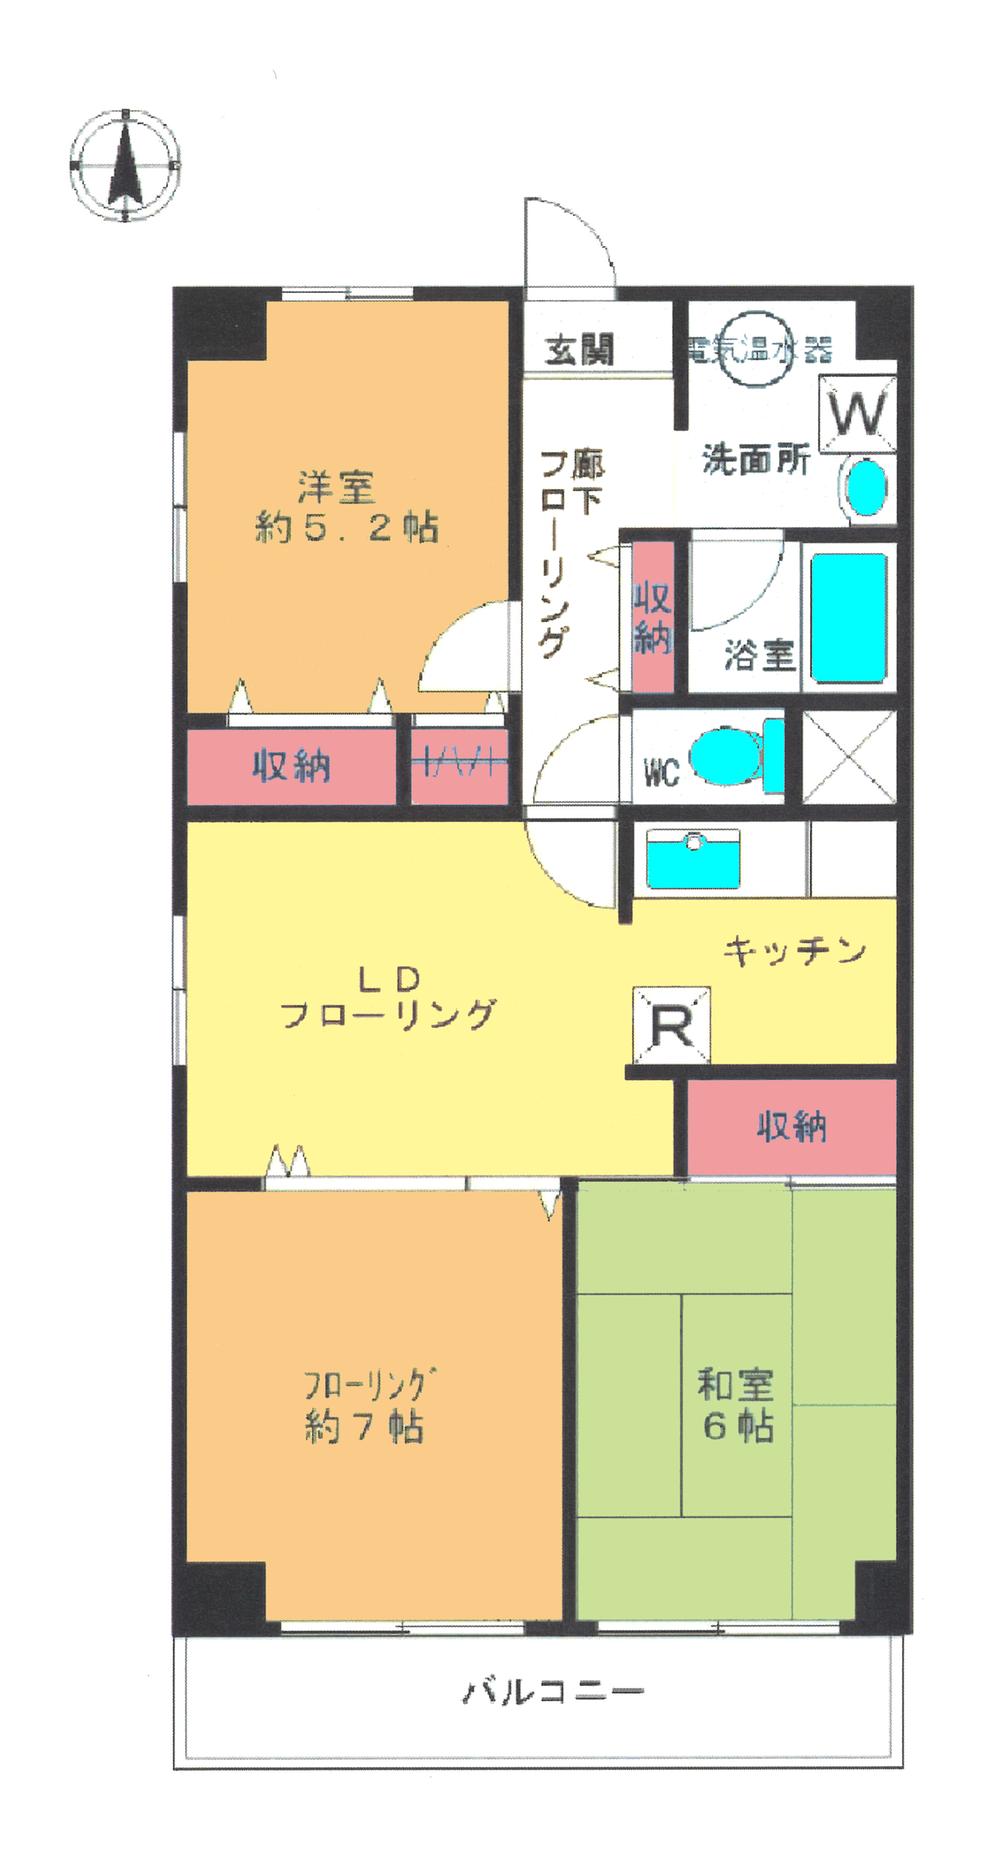 Floor plan. 3LDK, Price 11.5 million yen, Footprint 64.1 sq m , Balcony area 6.93 sq m floor plan